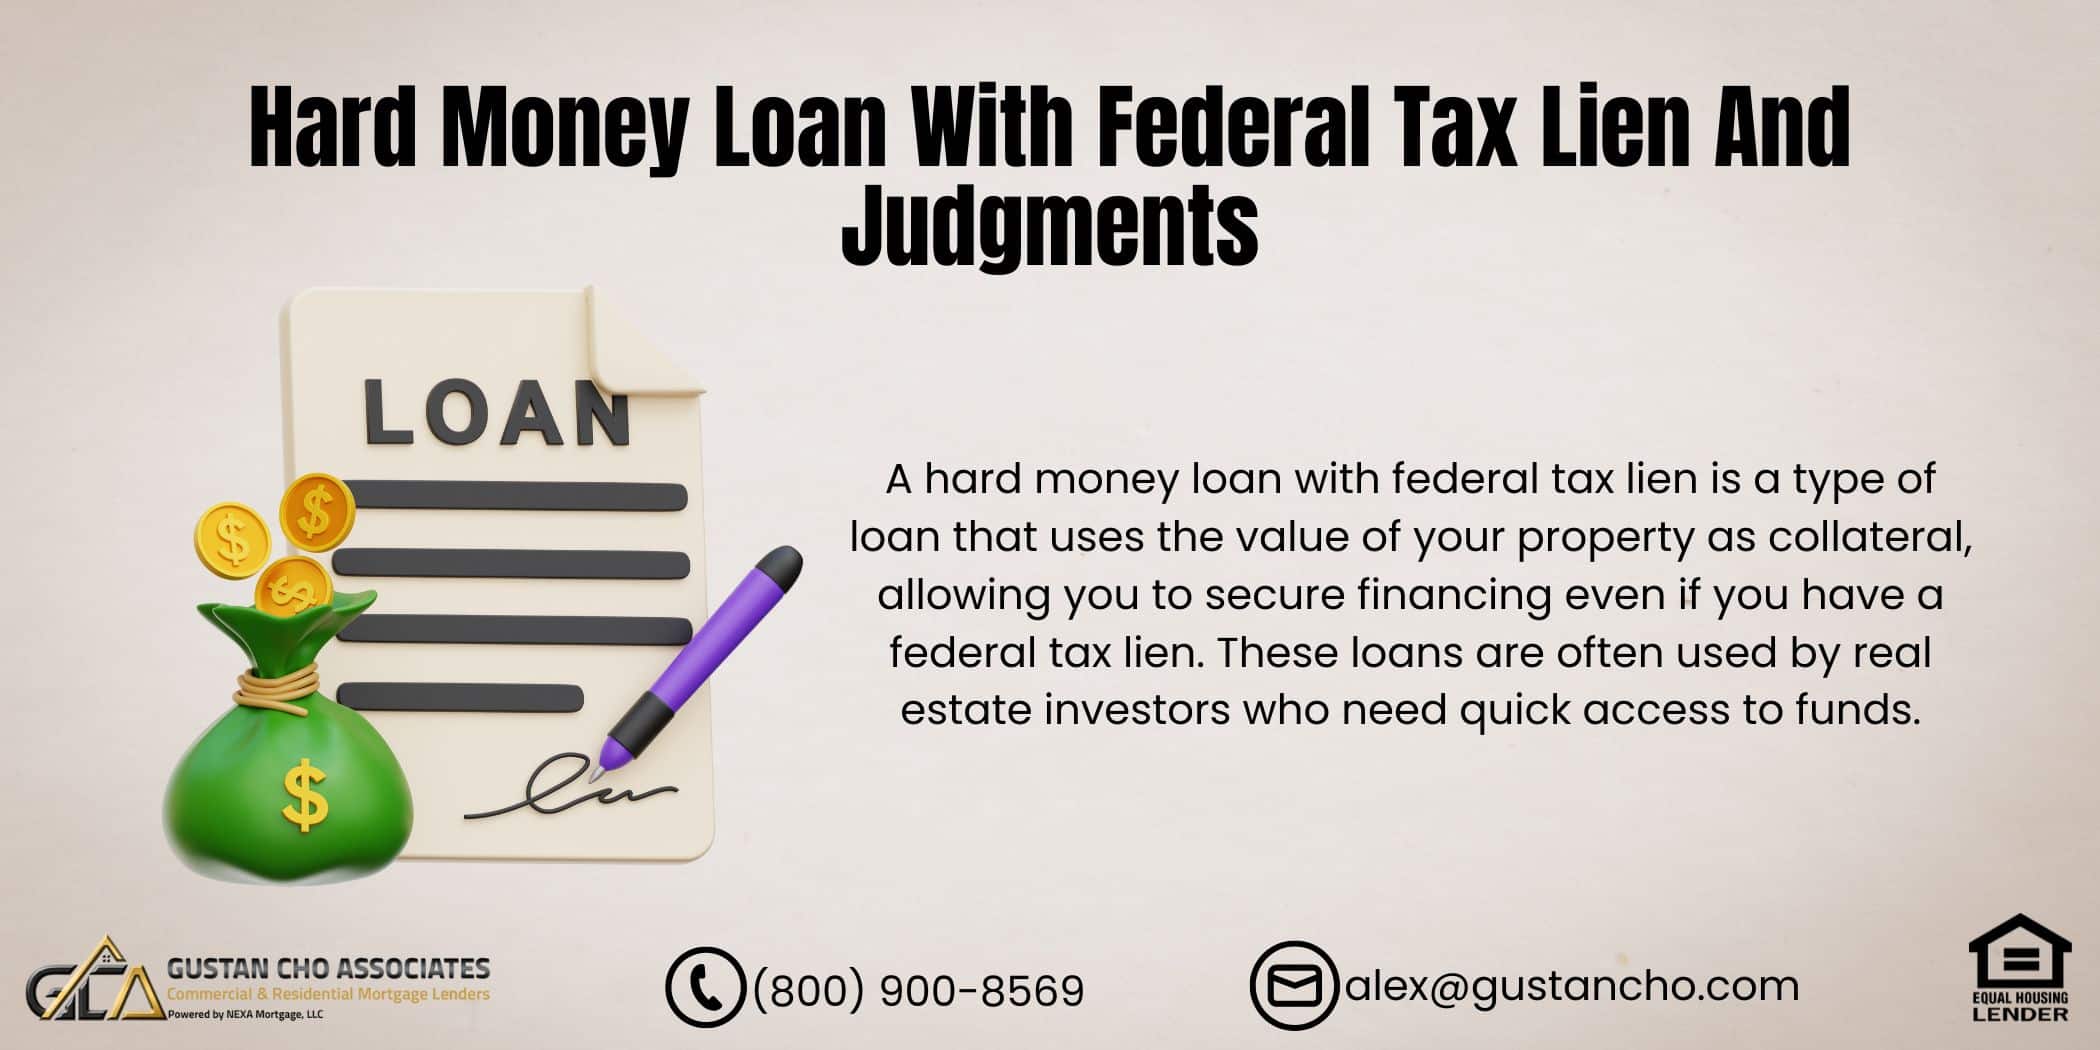 Hard Money Loan With Federal Tax Lien